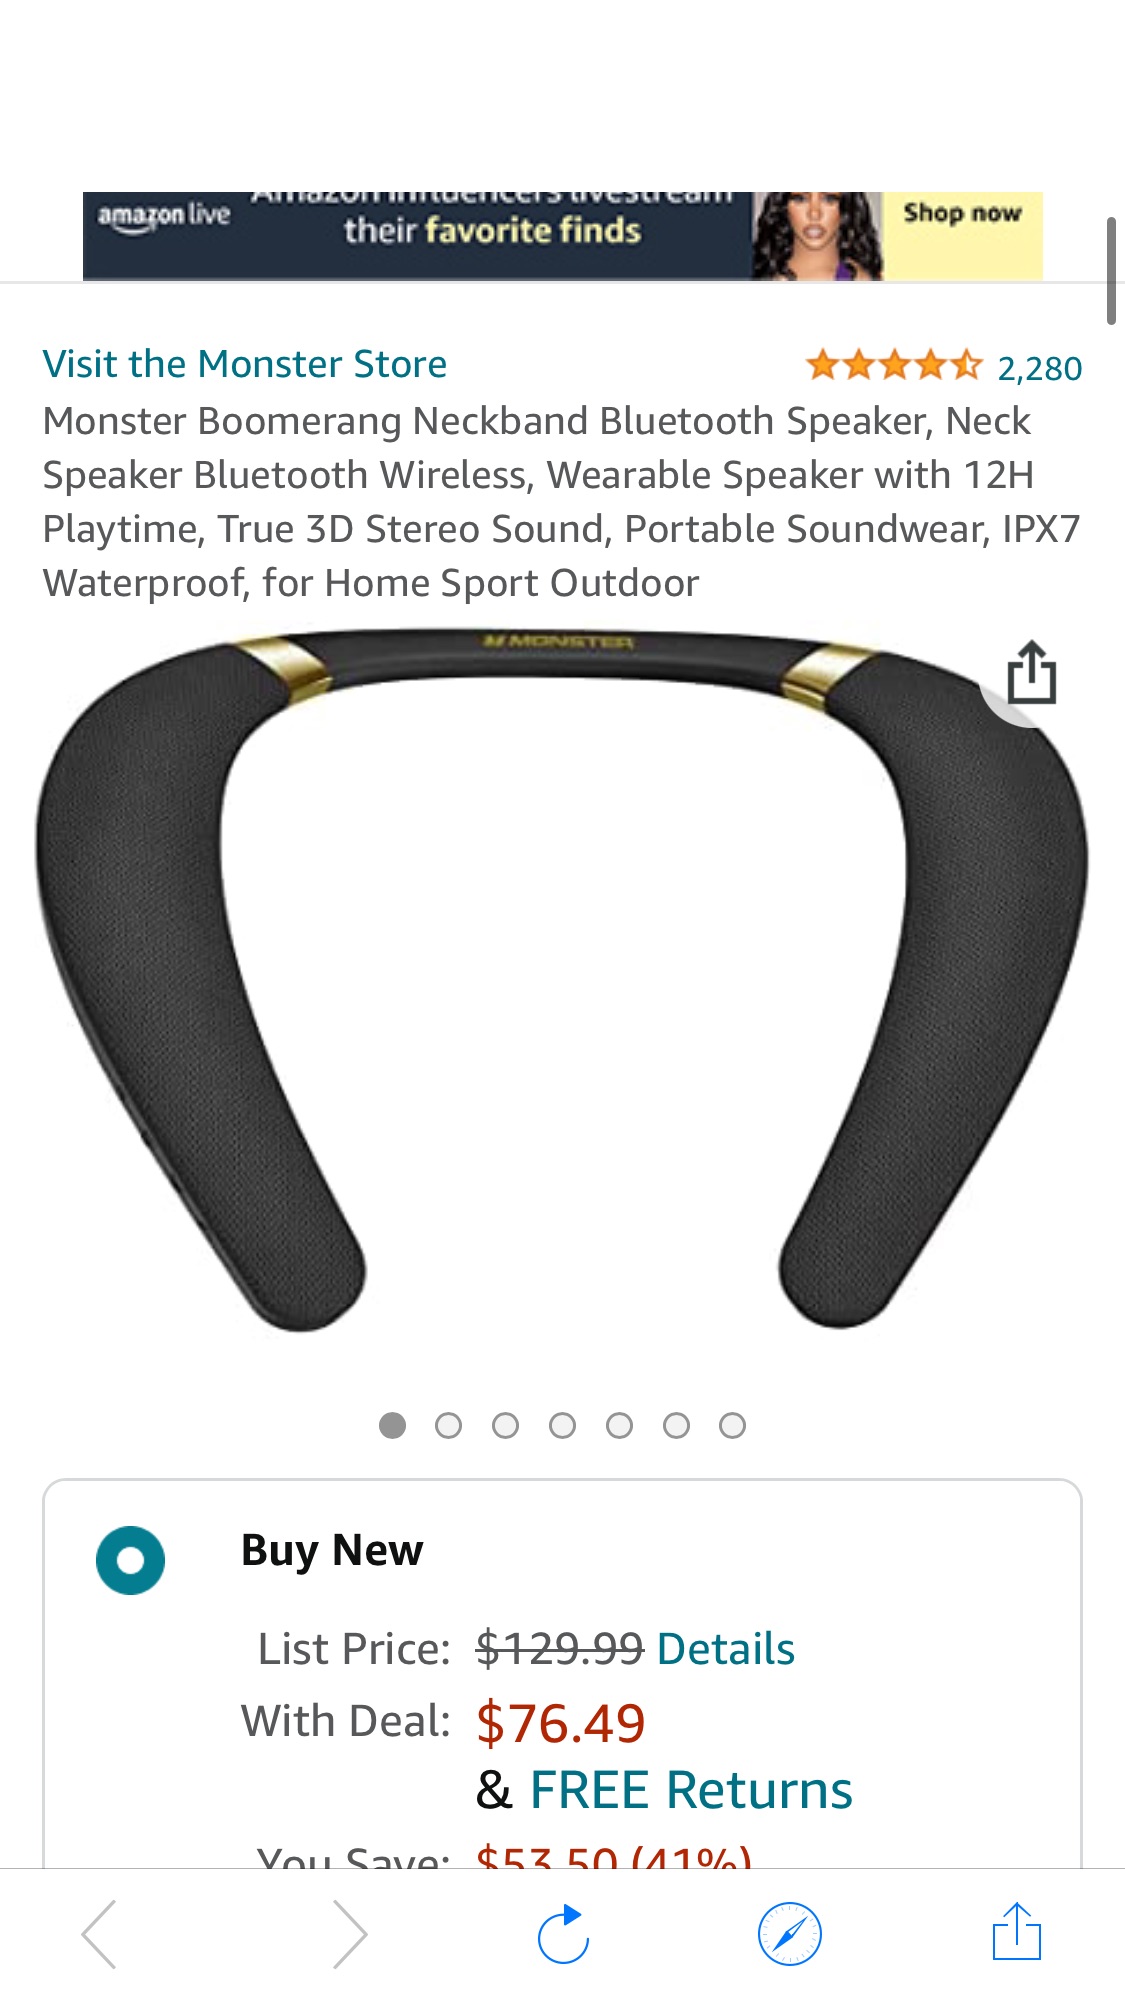 Monster Boomerang Neckband Bluetooth Speaker, Neck Speaker Bluetooth Wireless, Wearable Speaker with 12H Playtime, True 3D Stereo Sound, Portable Soundwear, IPX7 Waterproof,肩上音箱